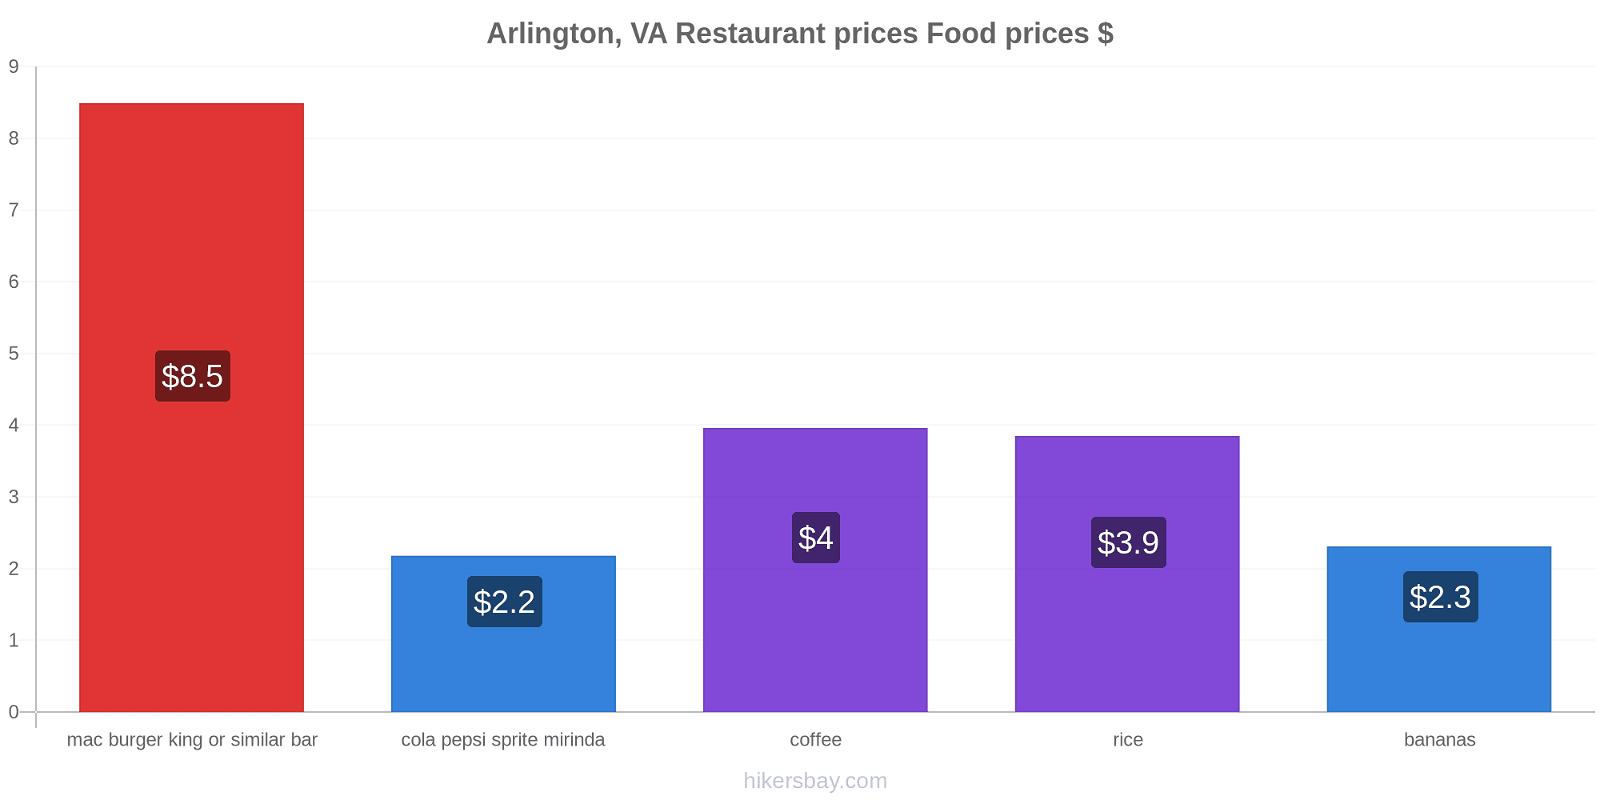 Arlington, VA price changes hikersbay.com